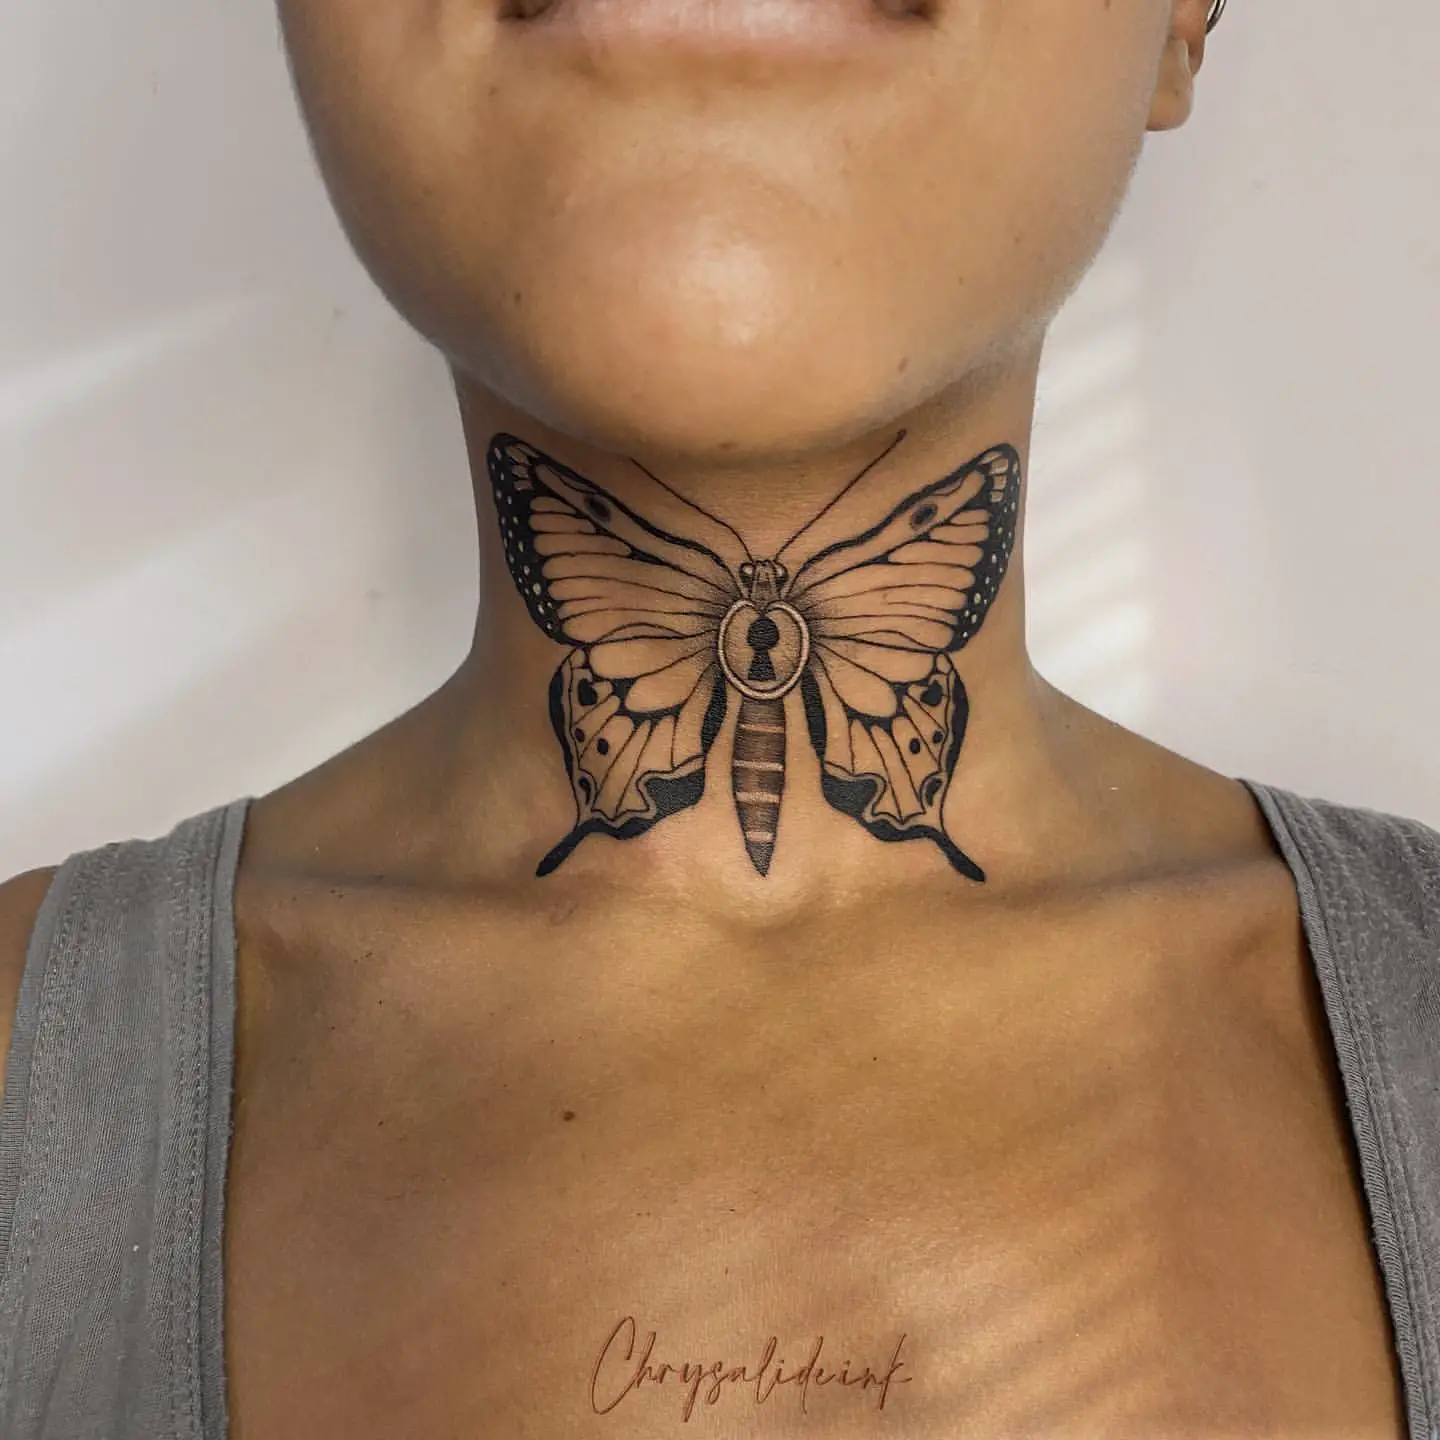 Big Bold Blackwork Butterfly Tattoo on Woman’s Neck